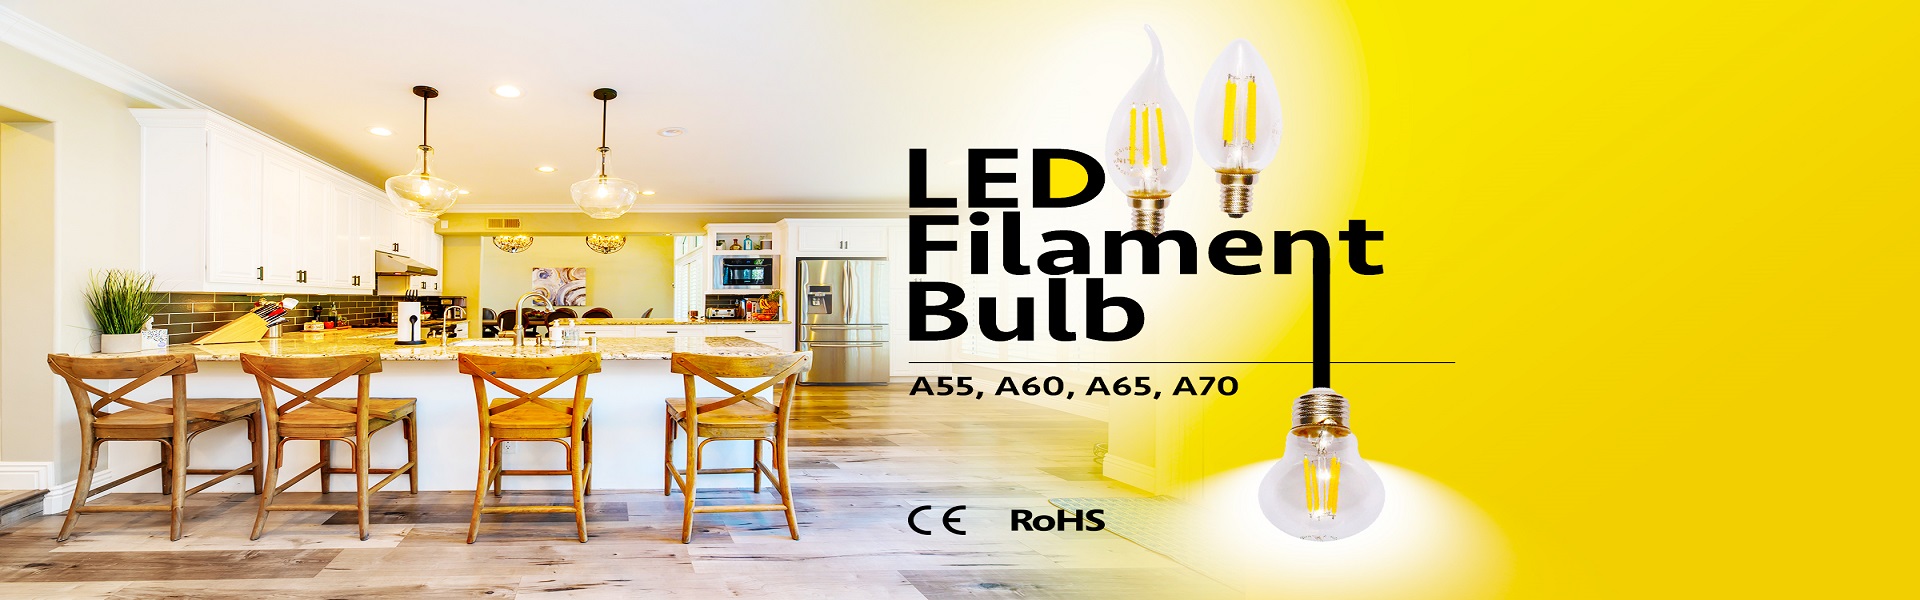 I-03-Filament-Bulb-B